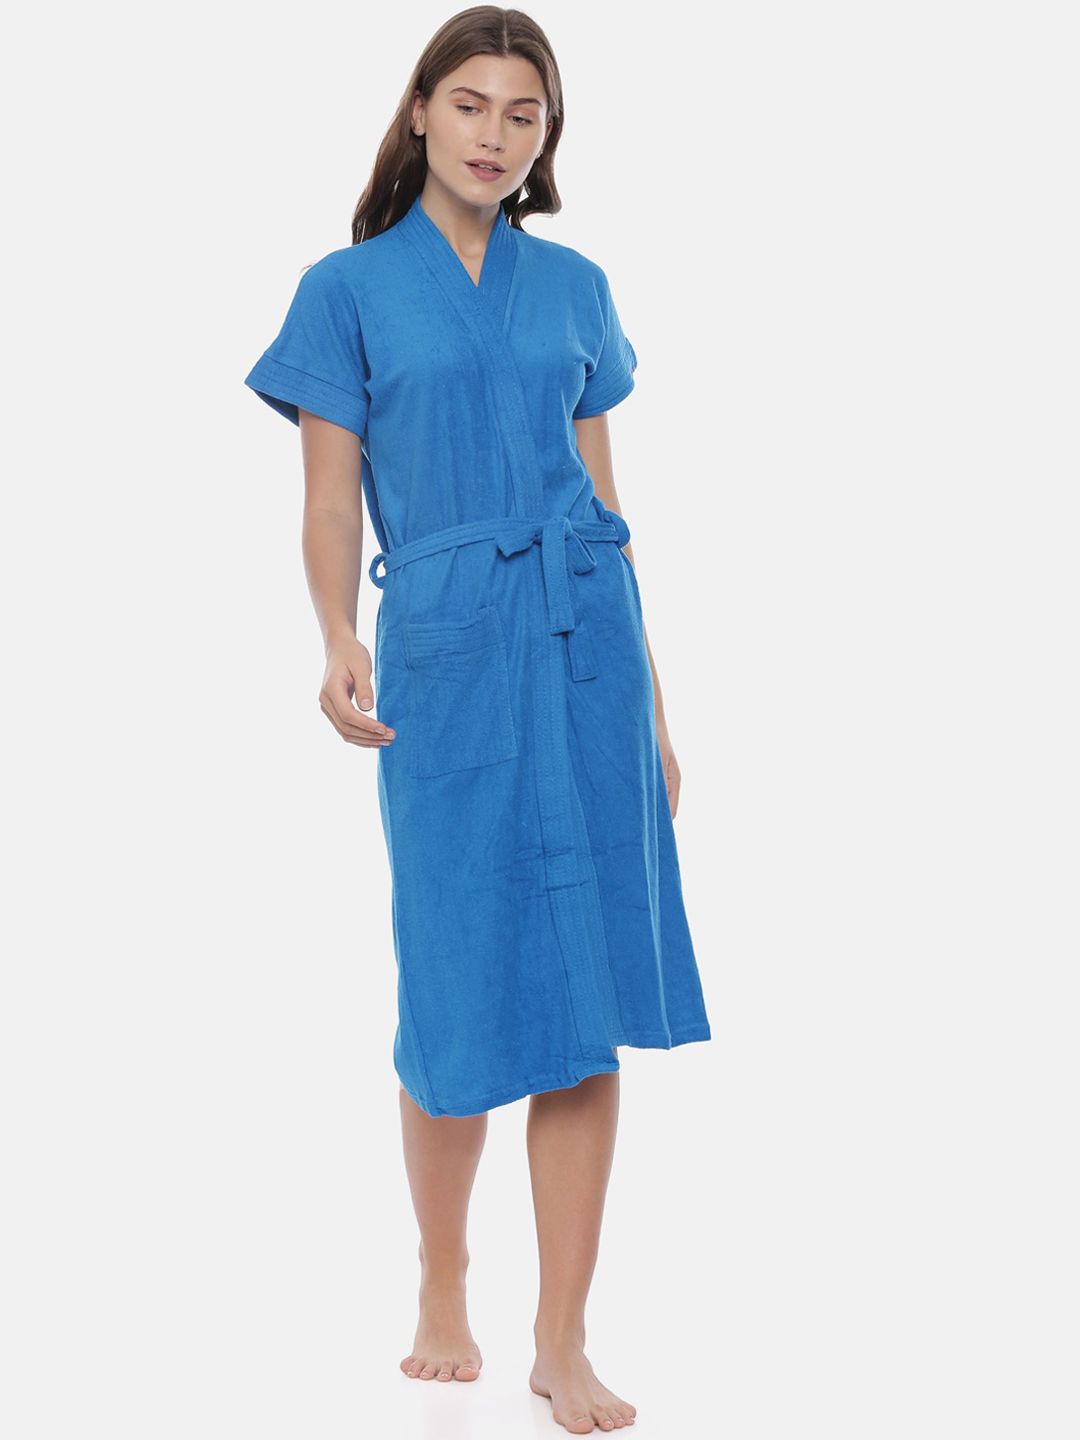 GOLDSTROMS Women Blue Solid Bathrobe Price in India